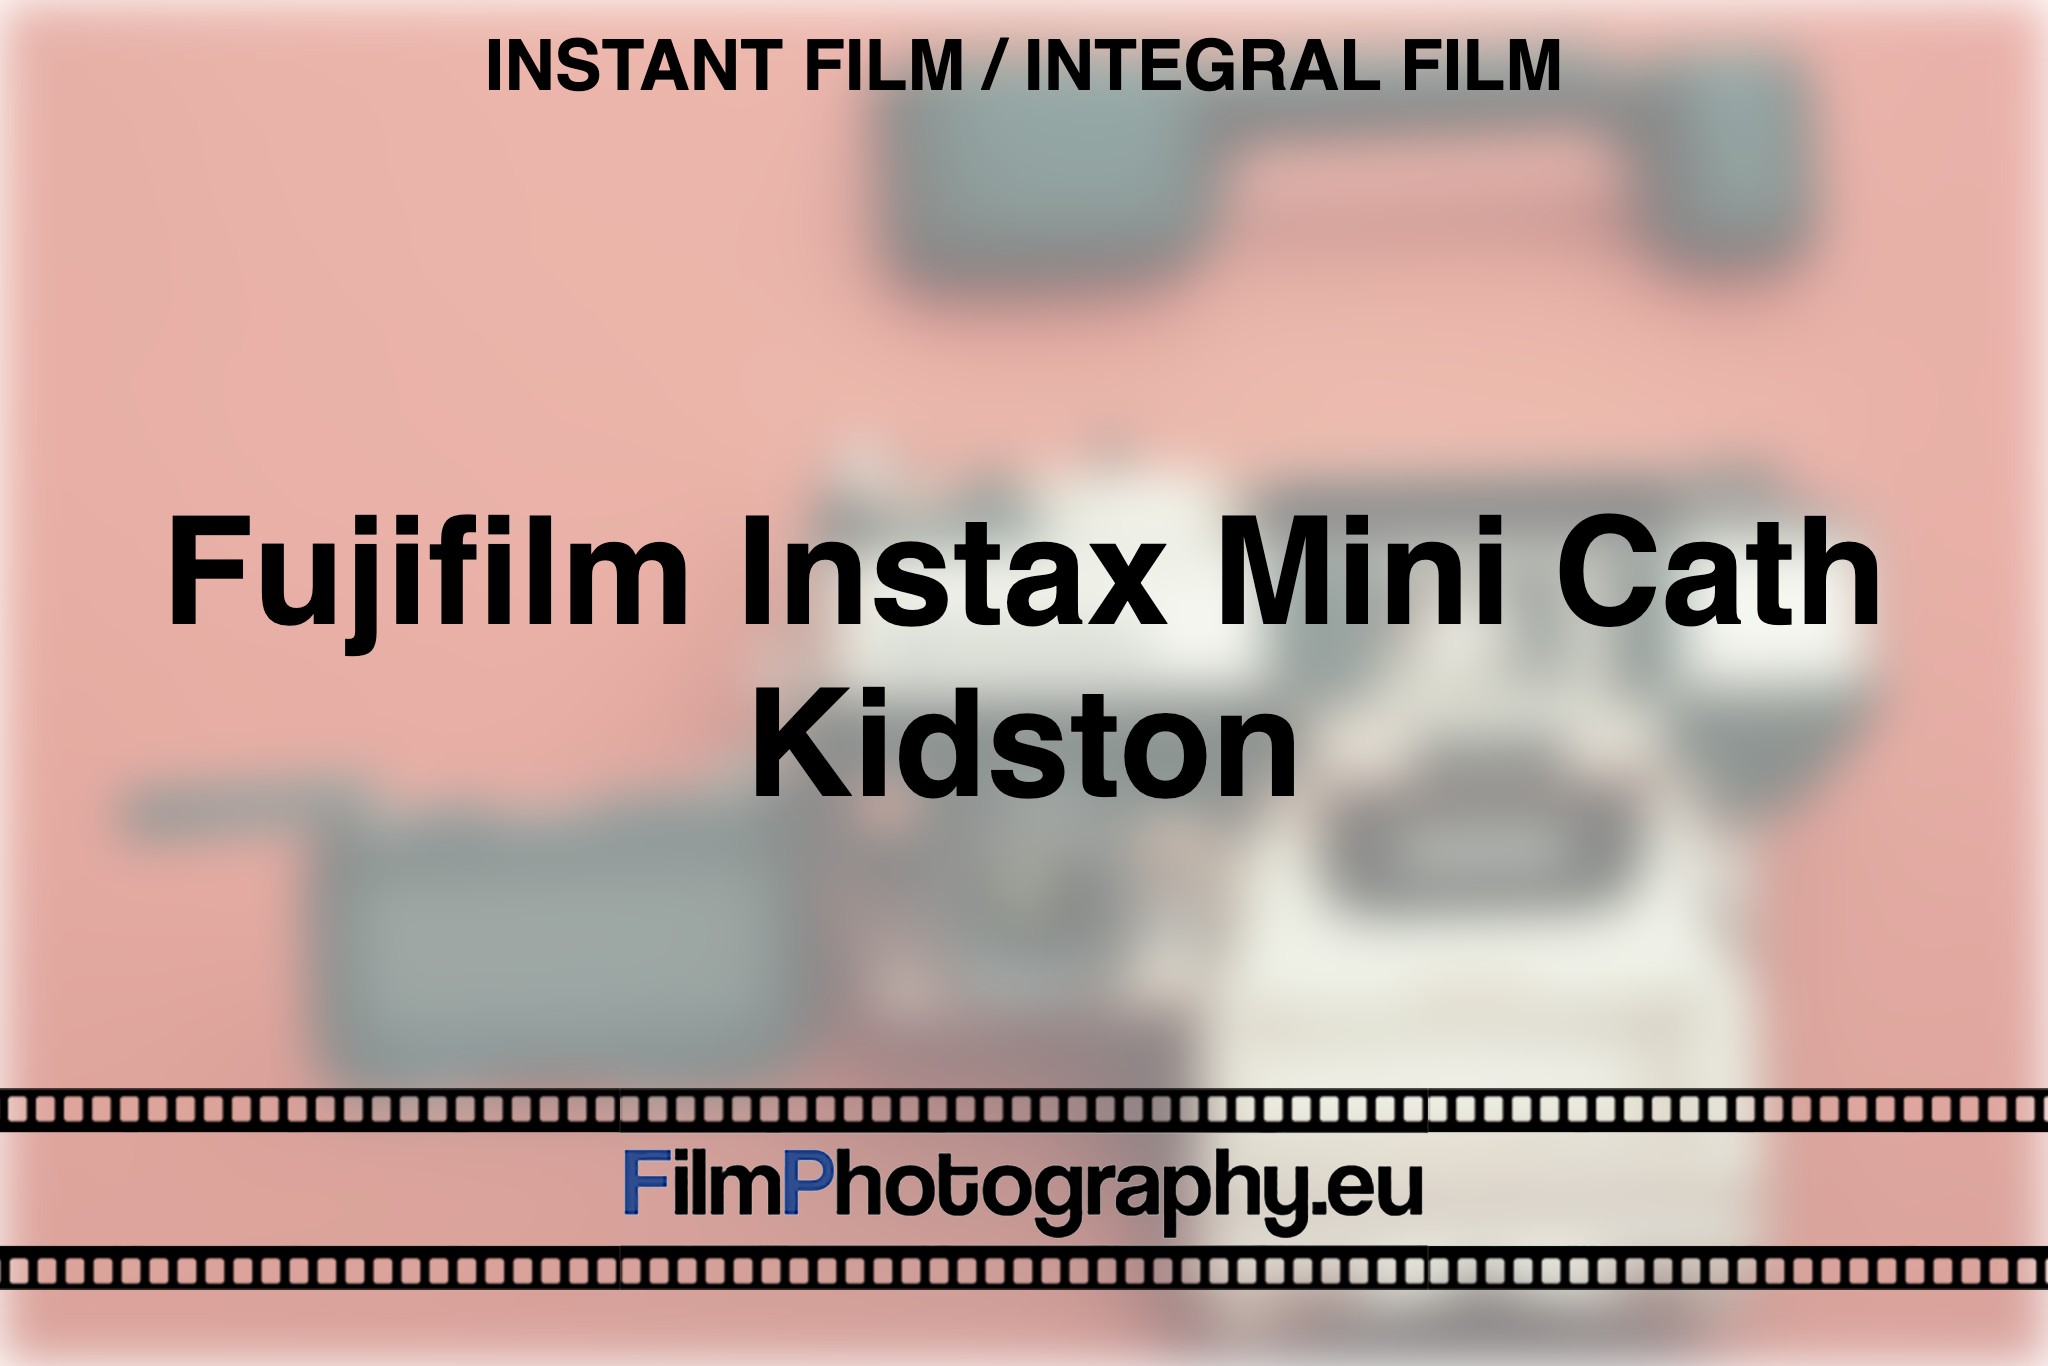 fujifilm-instax-mini-cath-kidston-instant-film-integral-film-bnv